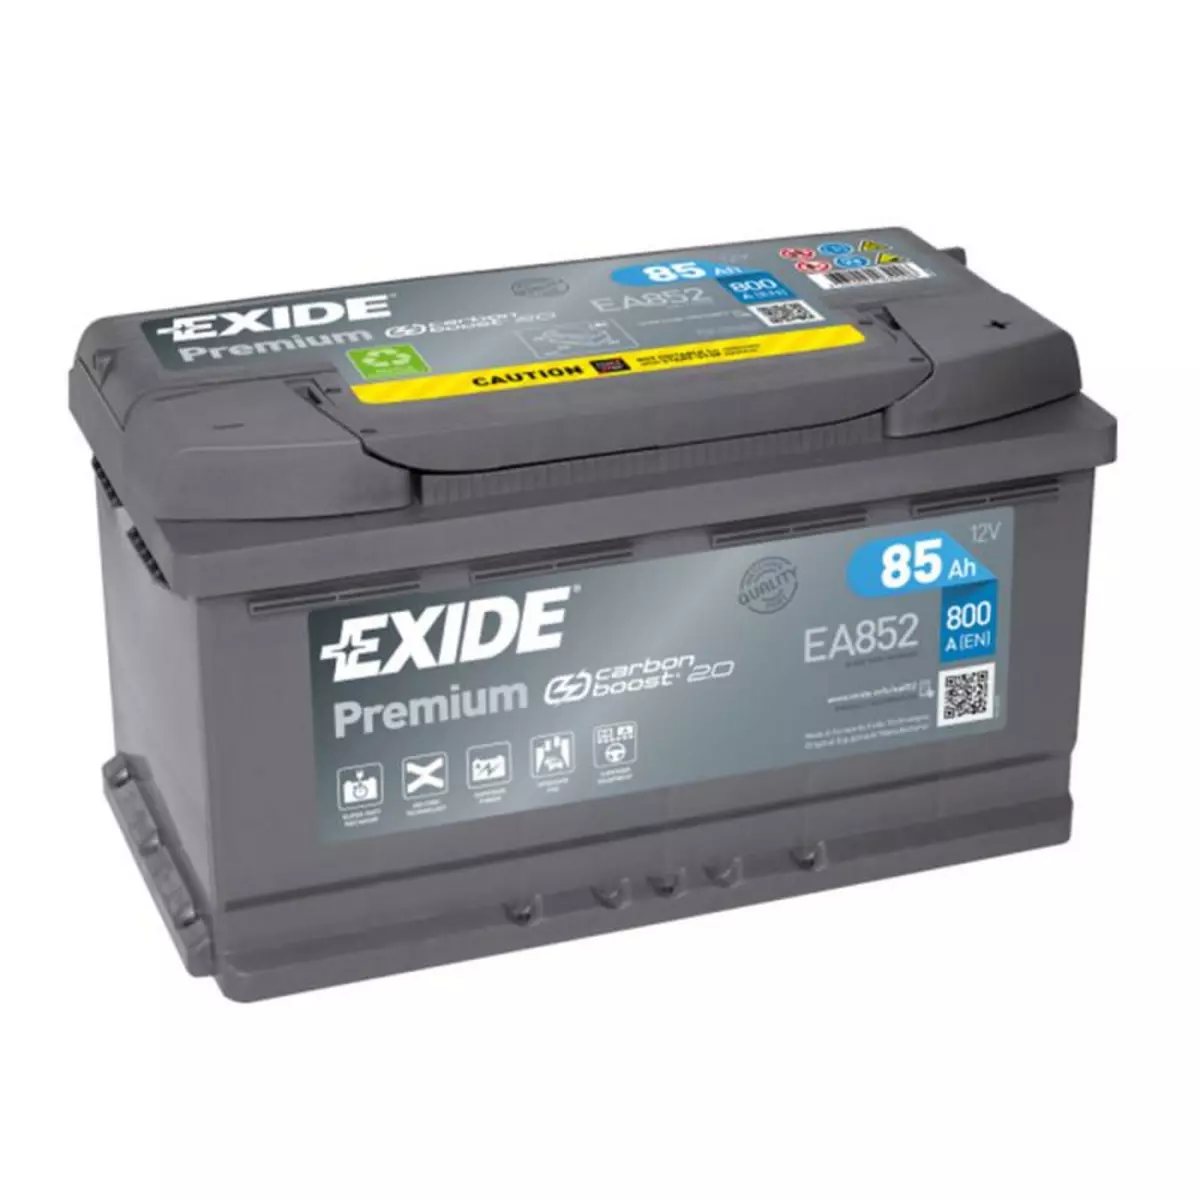 EXIDE Batterie Exide Premium EA852 12v 85AH 800A LB4D